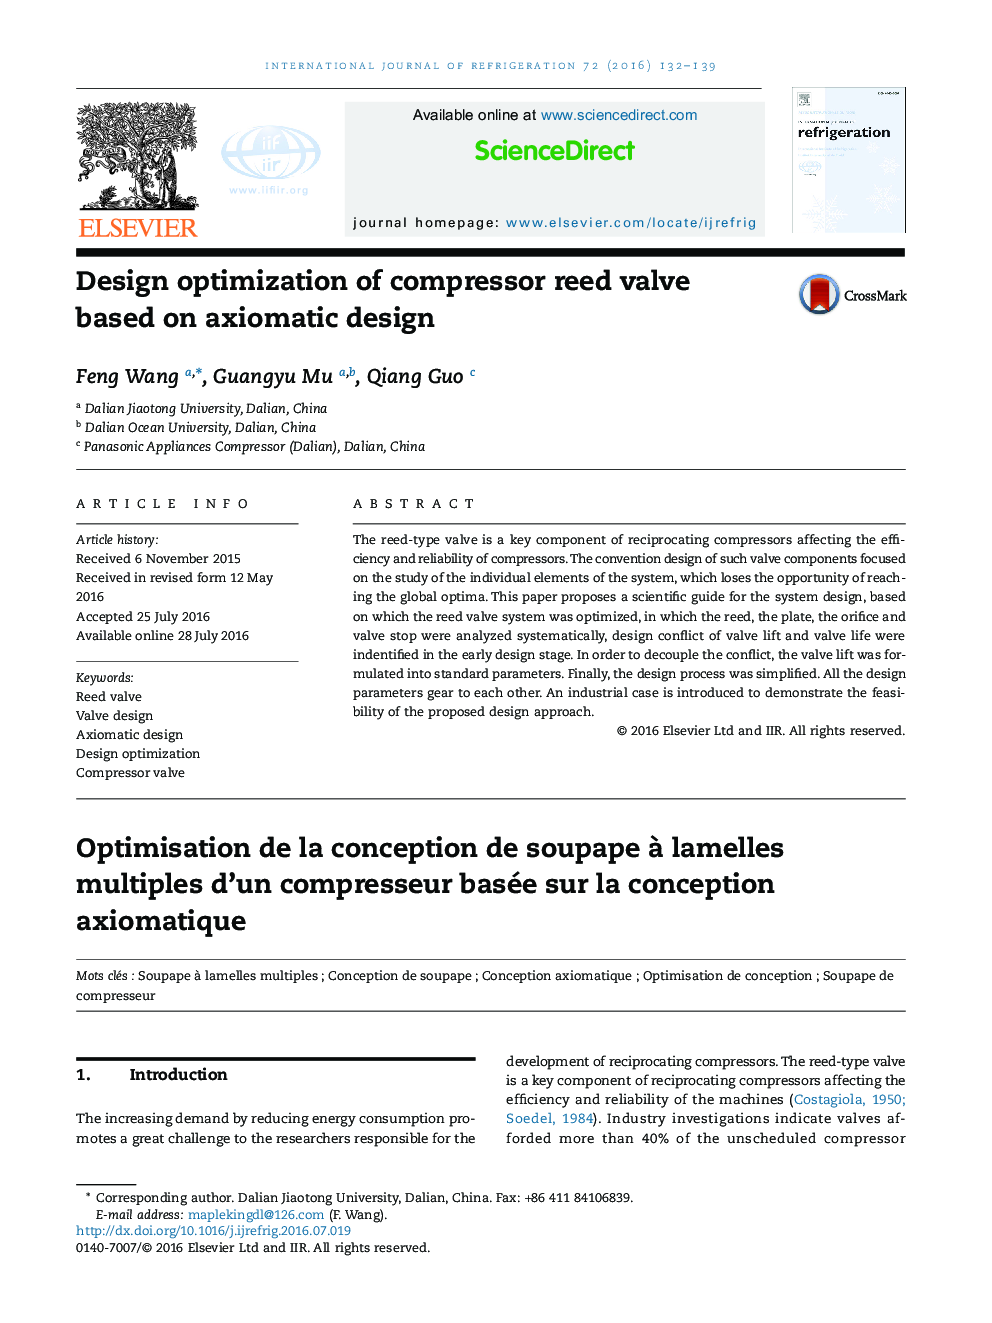 Design optimization of compressor reed valve based on axiomatic design